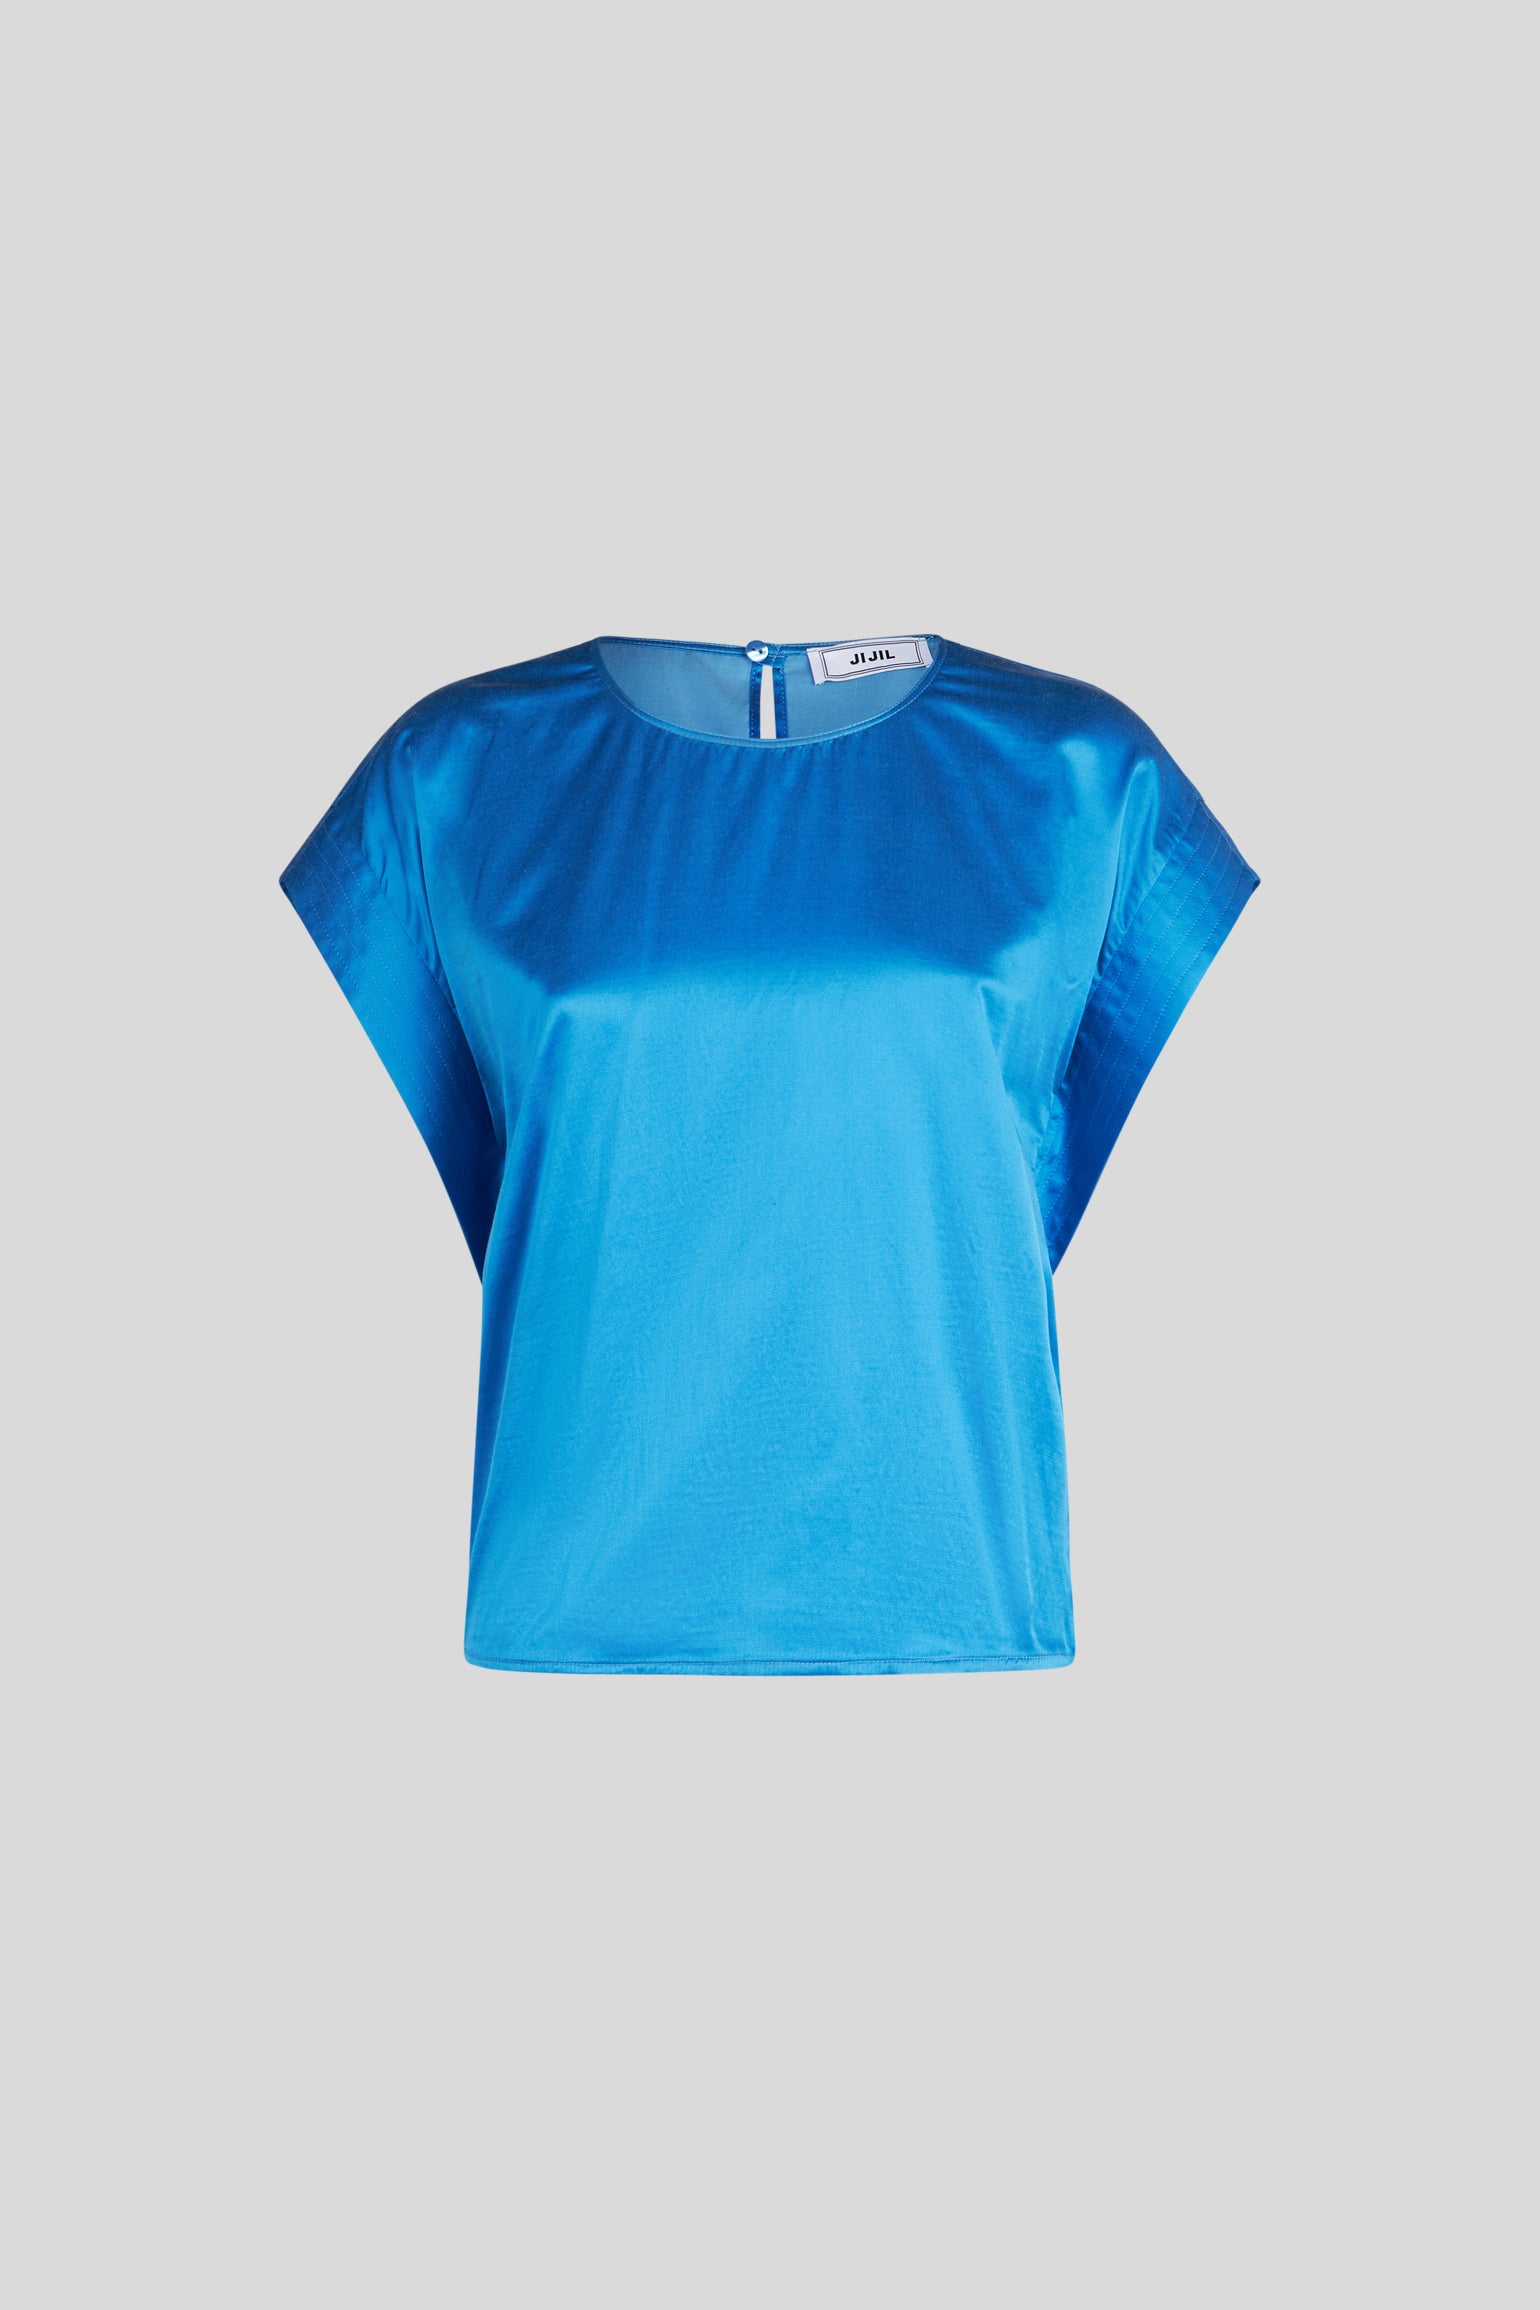 JIJIL T-Shirt in gemischtem Pilzblau-Kobalt